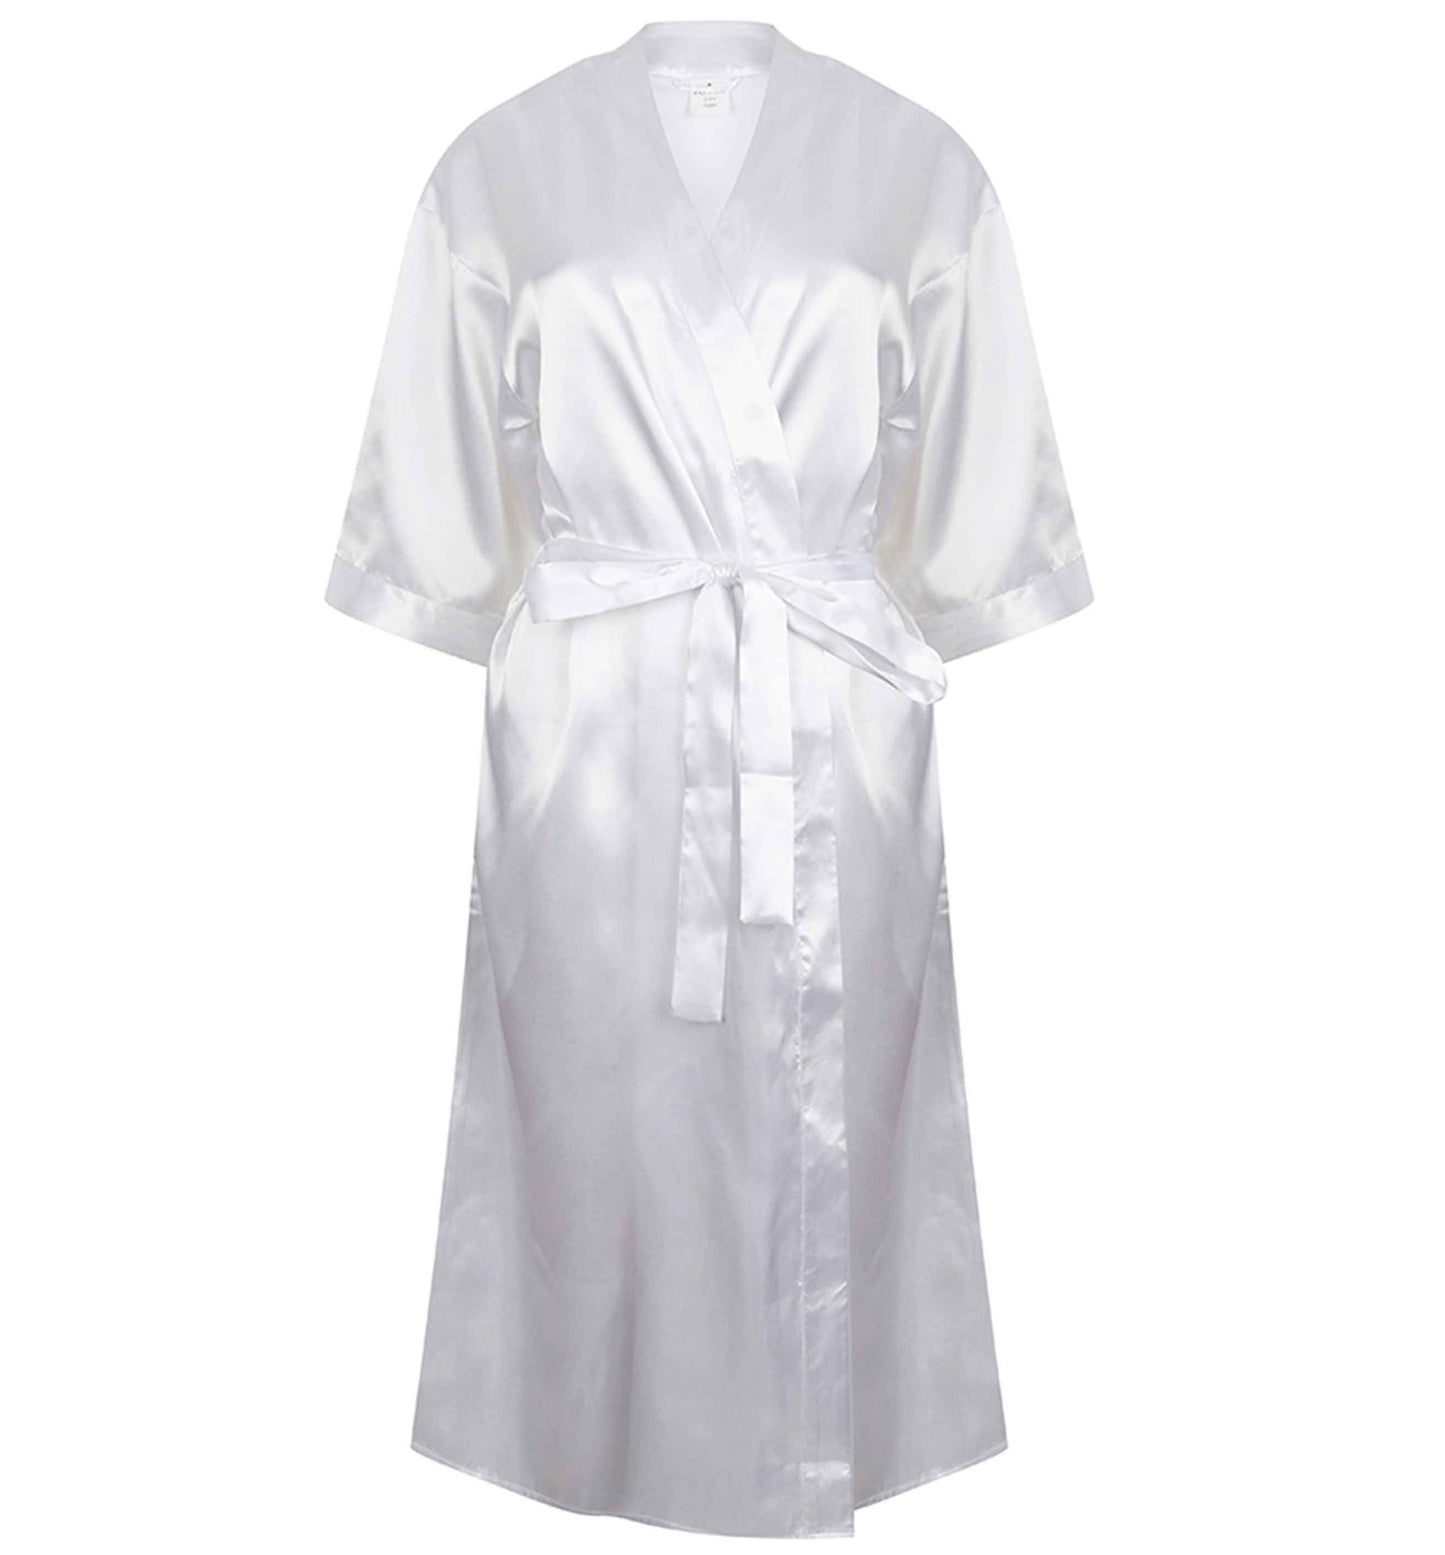 Have a beary merrry christmas | 8-18 | Kimono style satin robe | Ladies dressing gown